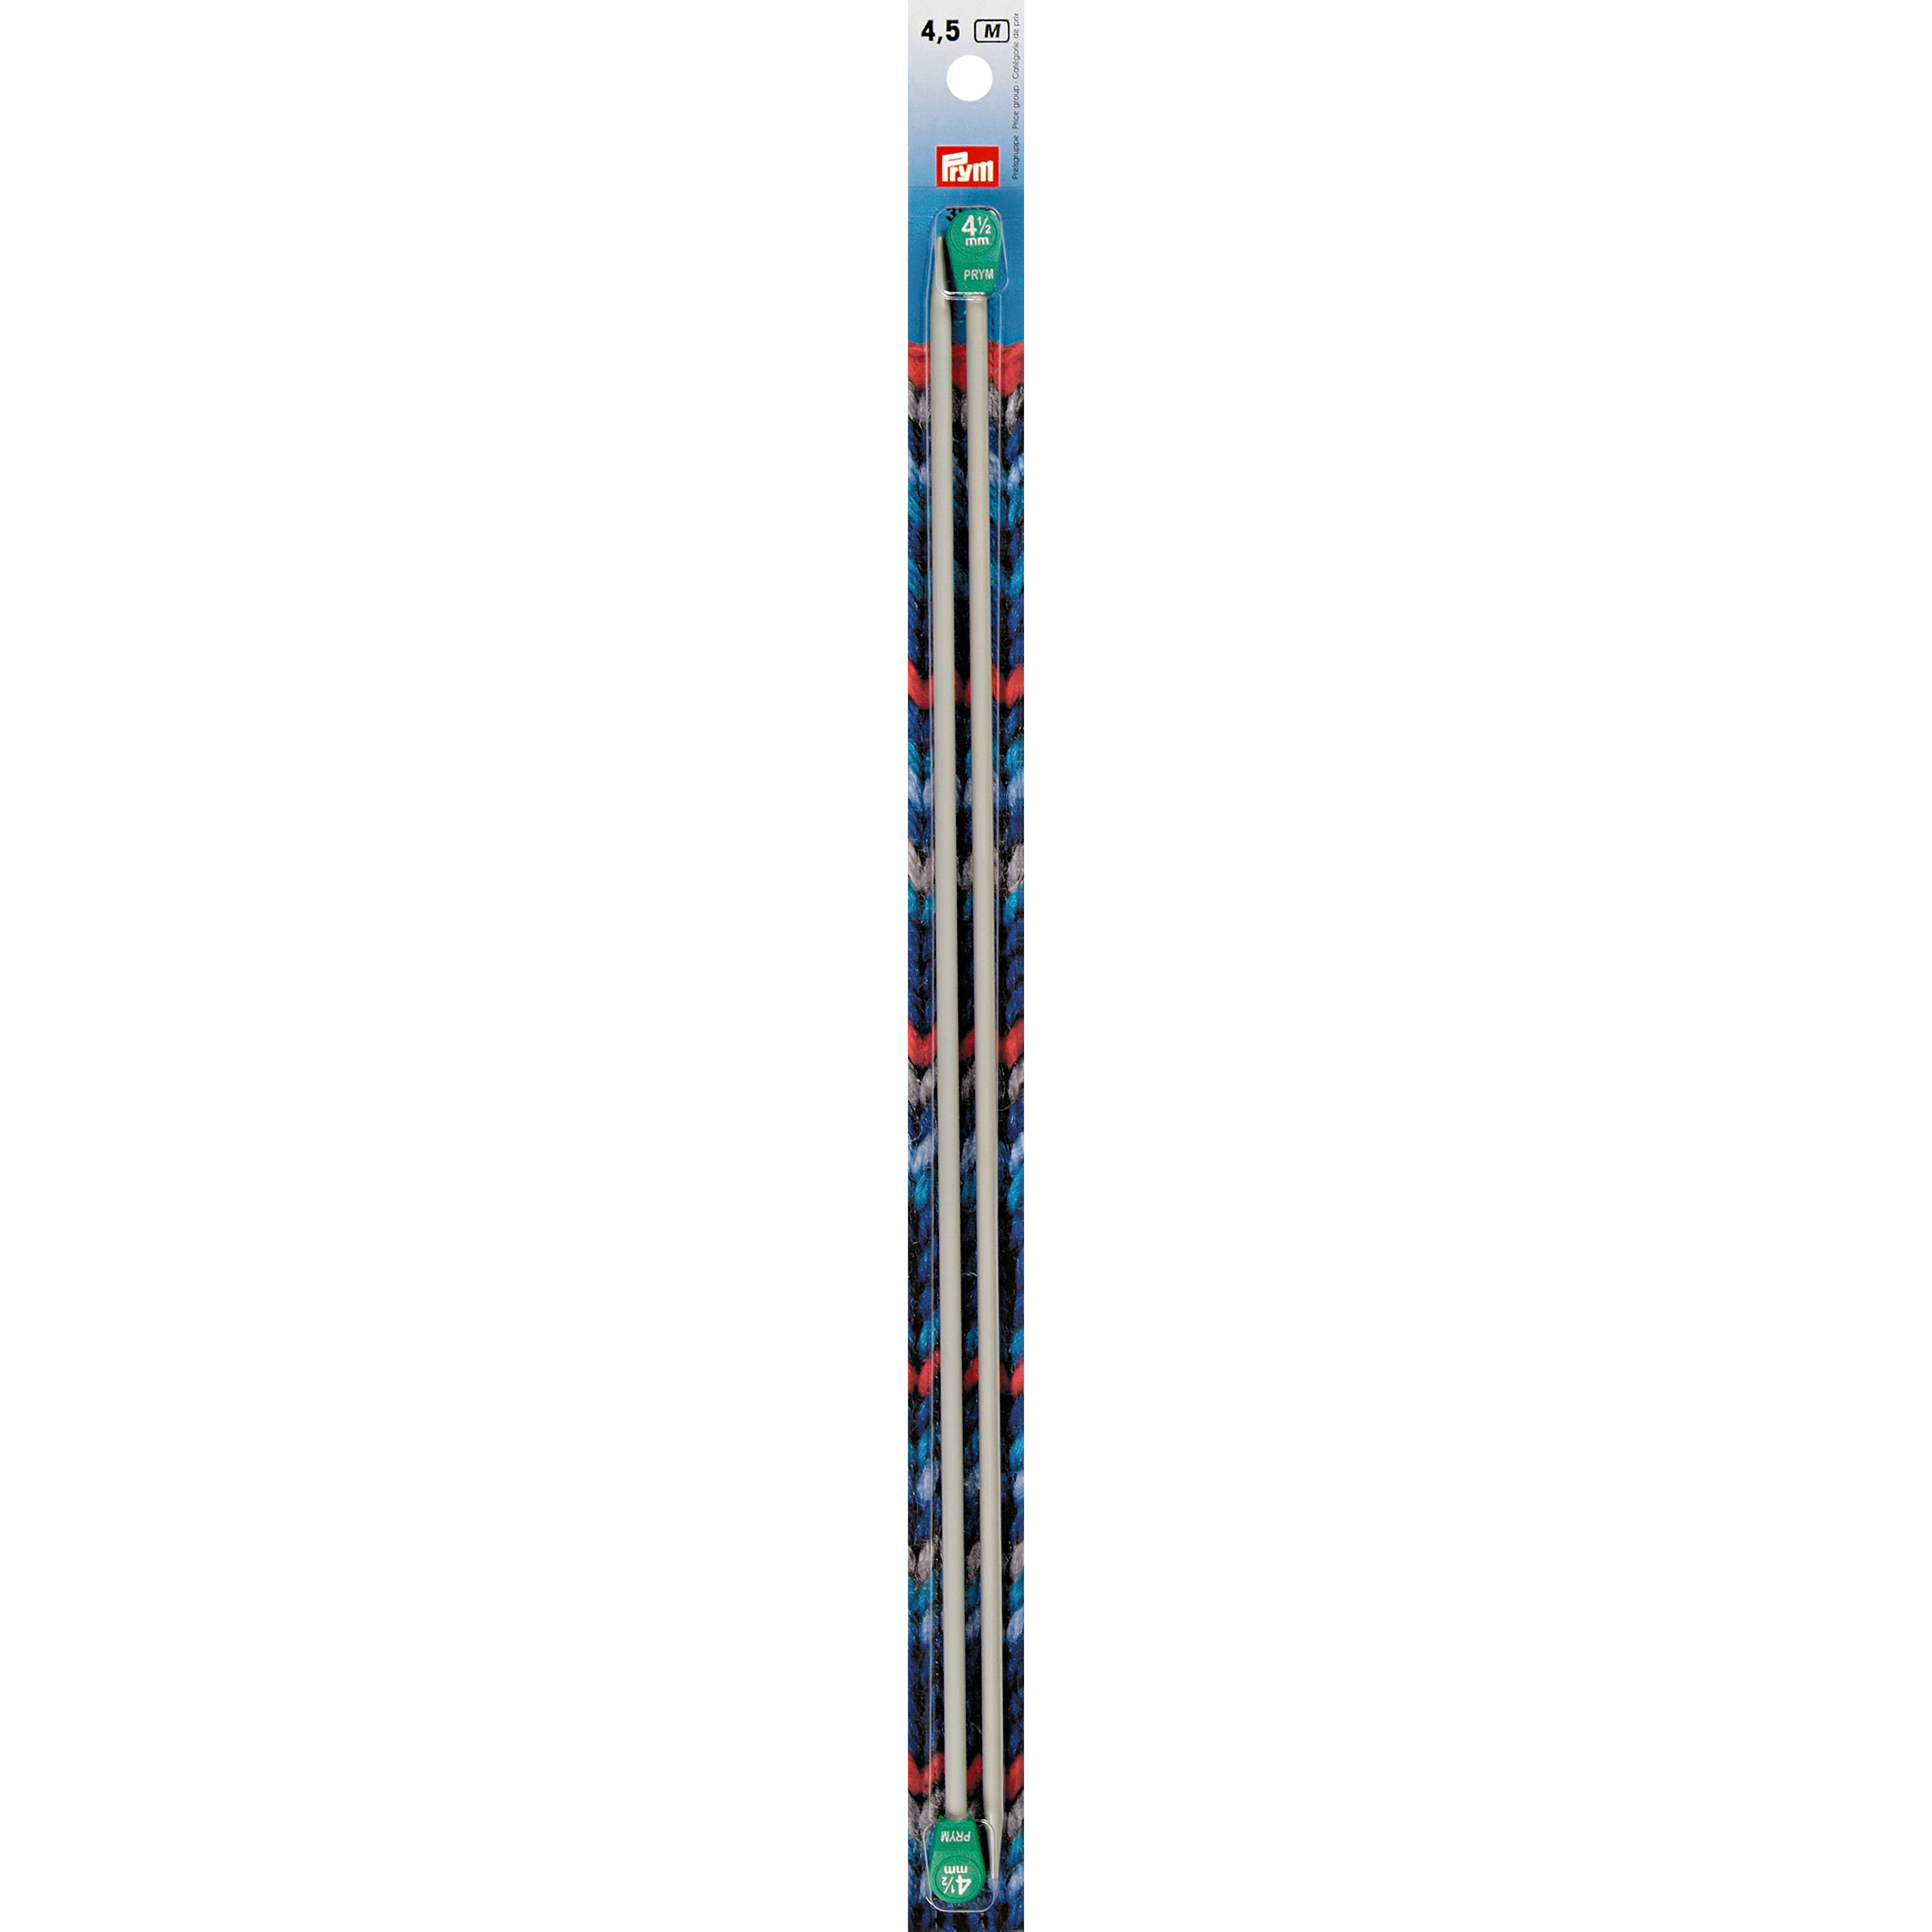 Knitting Needles - 4.5mm Straight 35cm Long by Prym 191 466